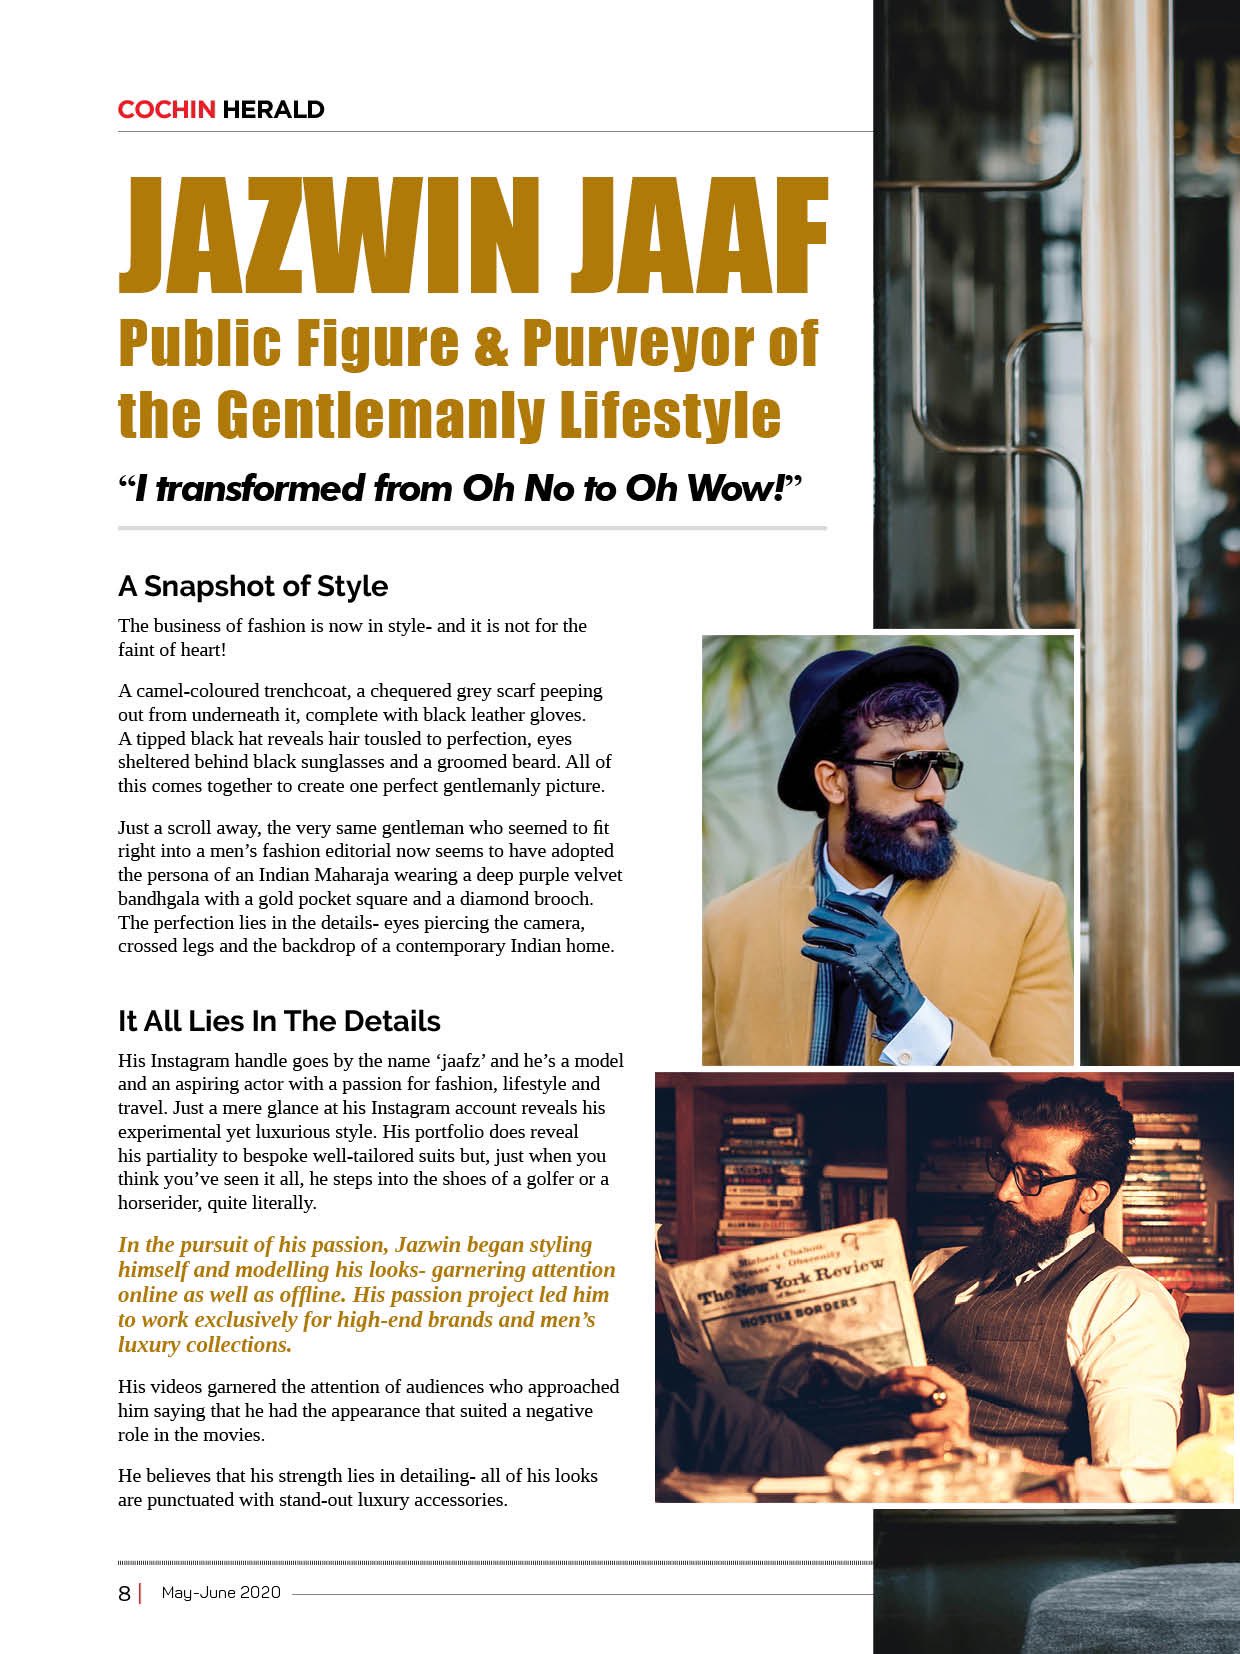 Jazwin Jaaf & becoming India's stylish gentleman - The Statesman